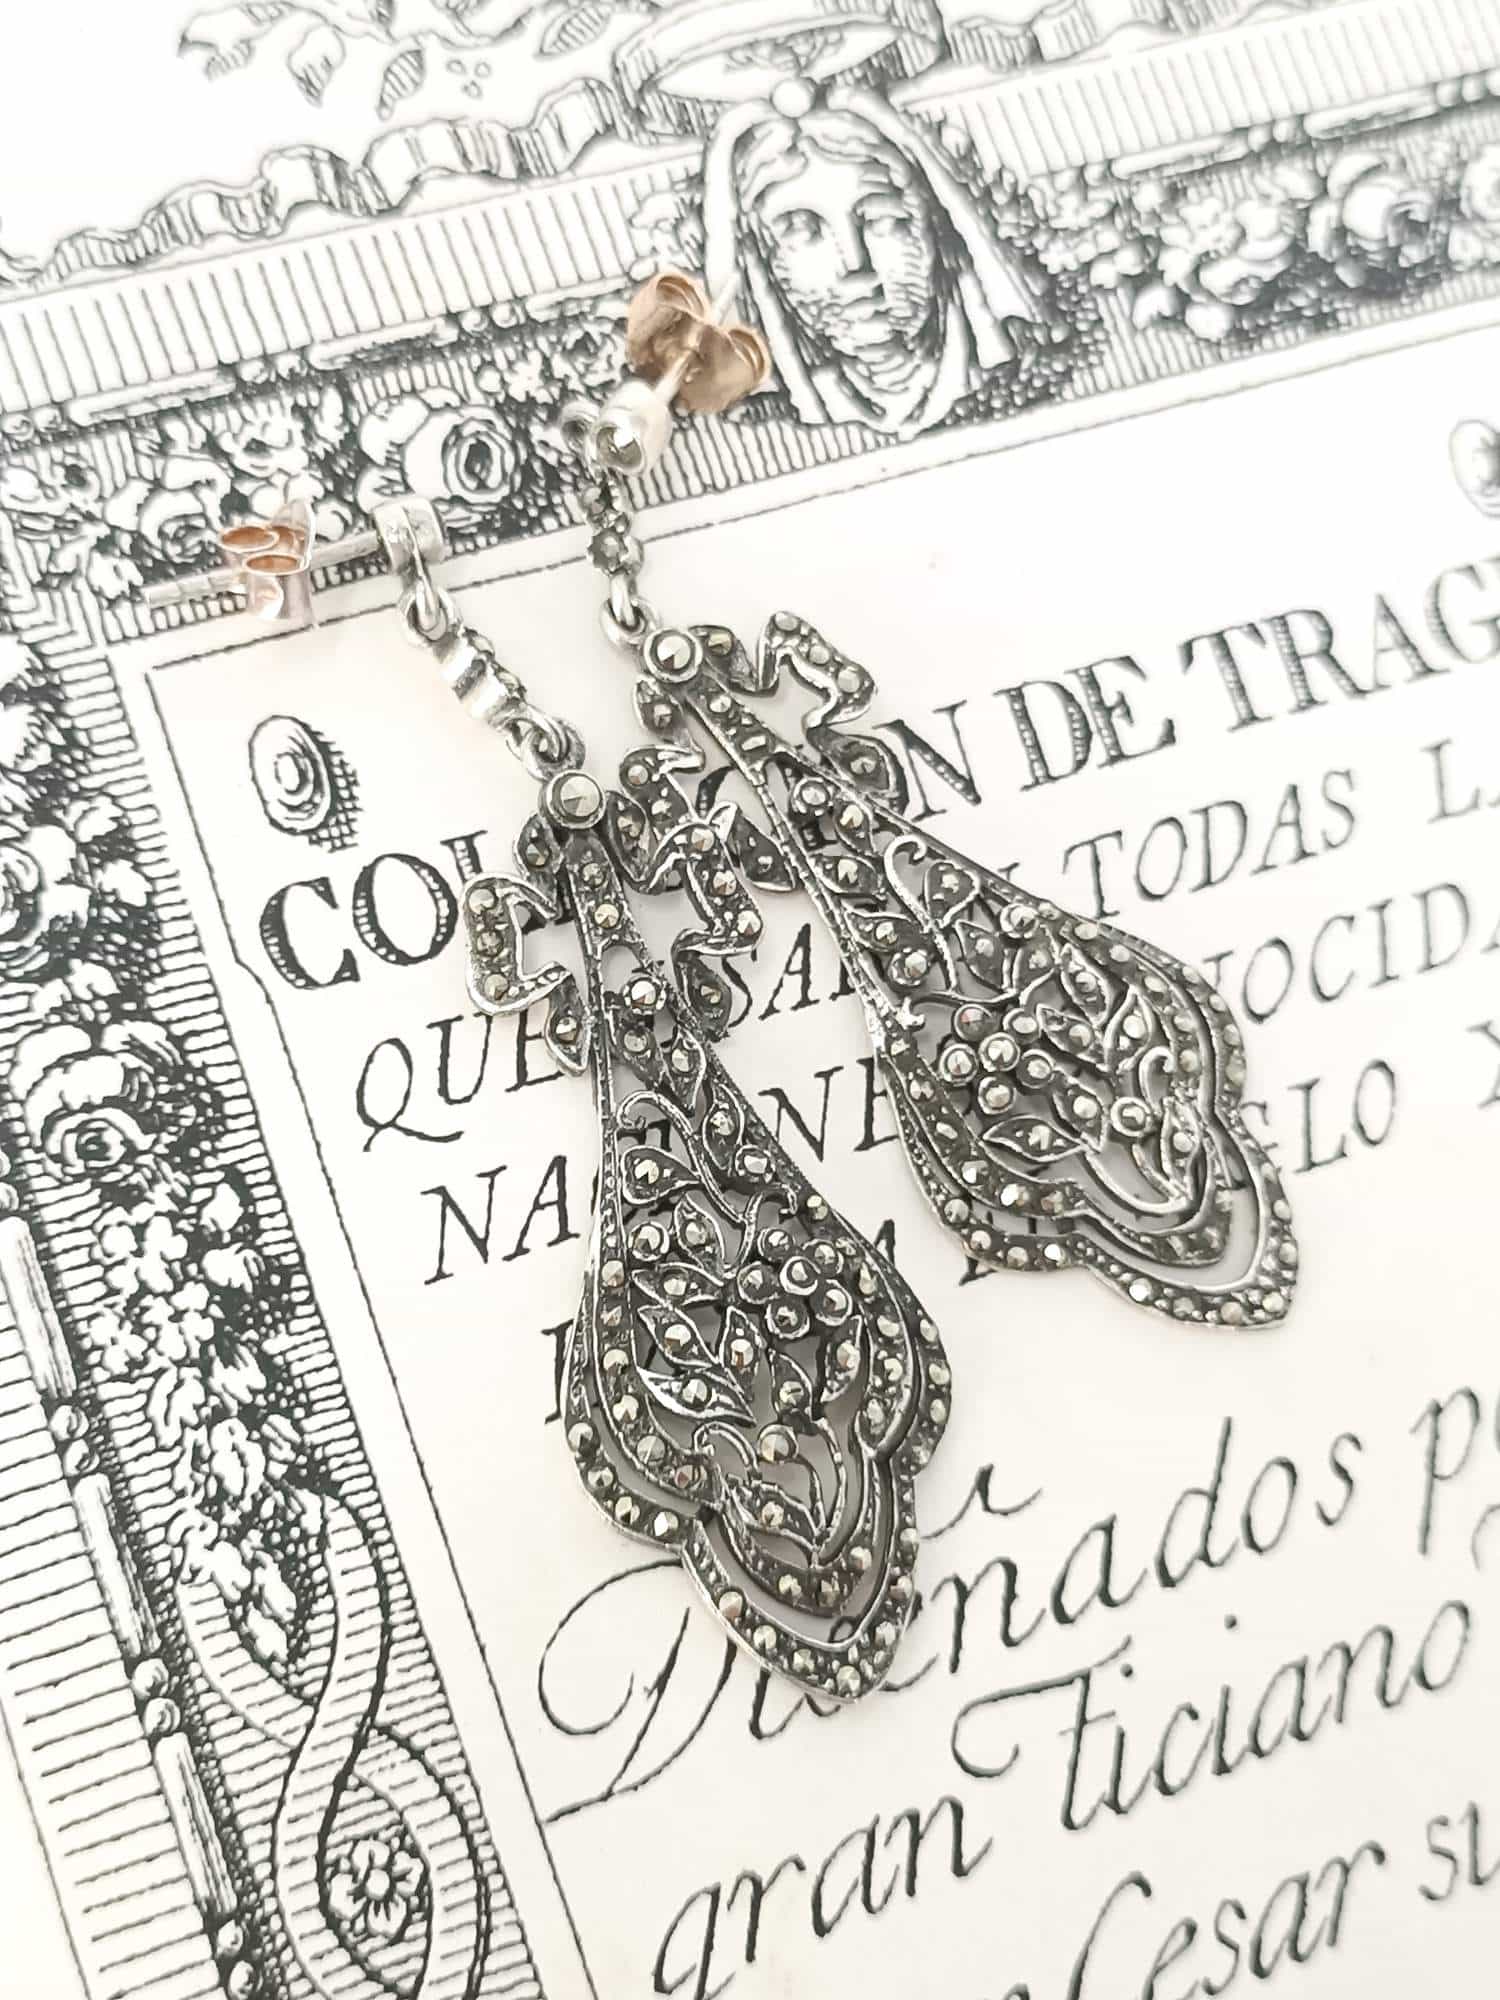 antique-vintage-silver-earrings